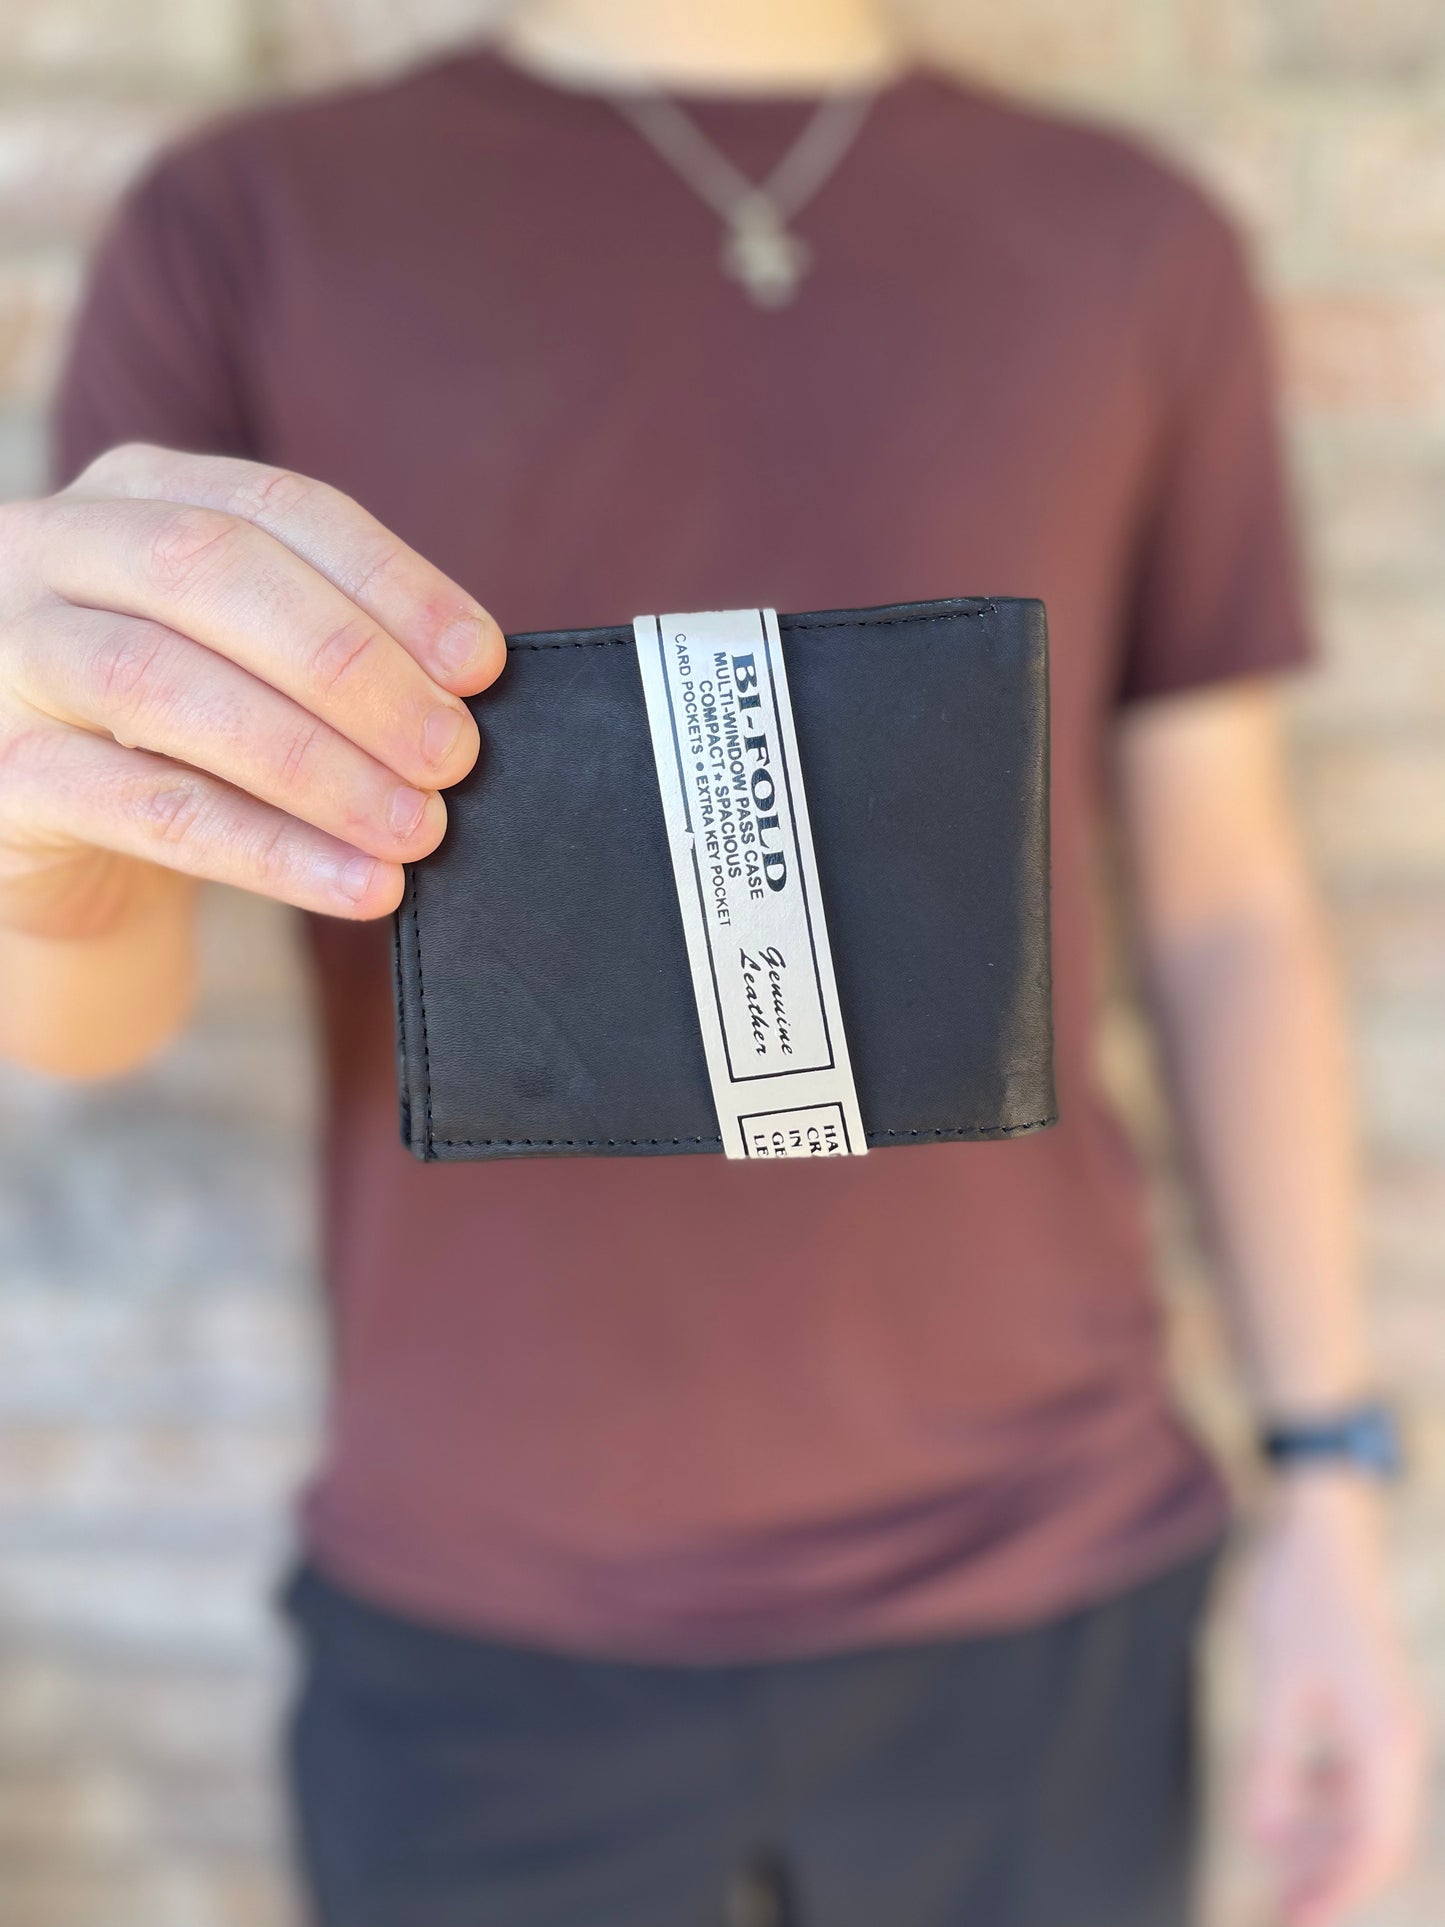 Men’s genuine, leather wallet